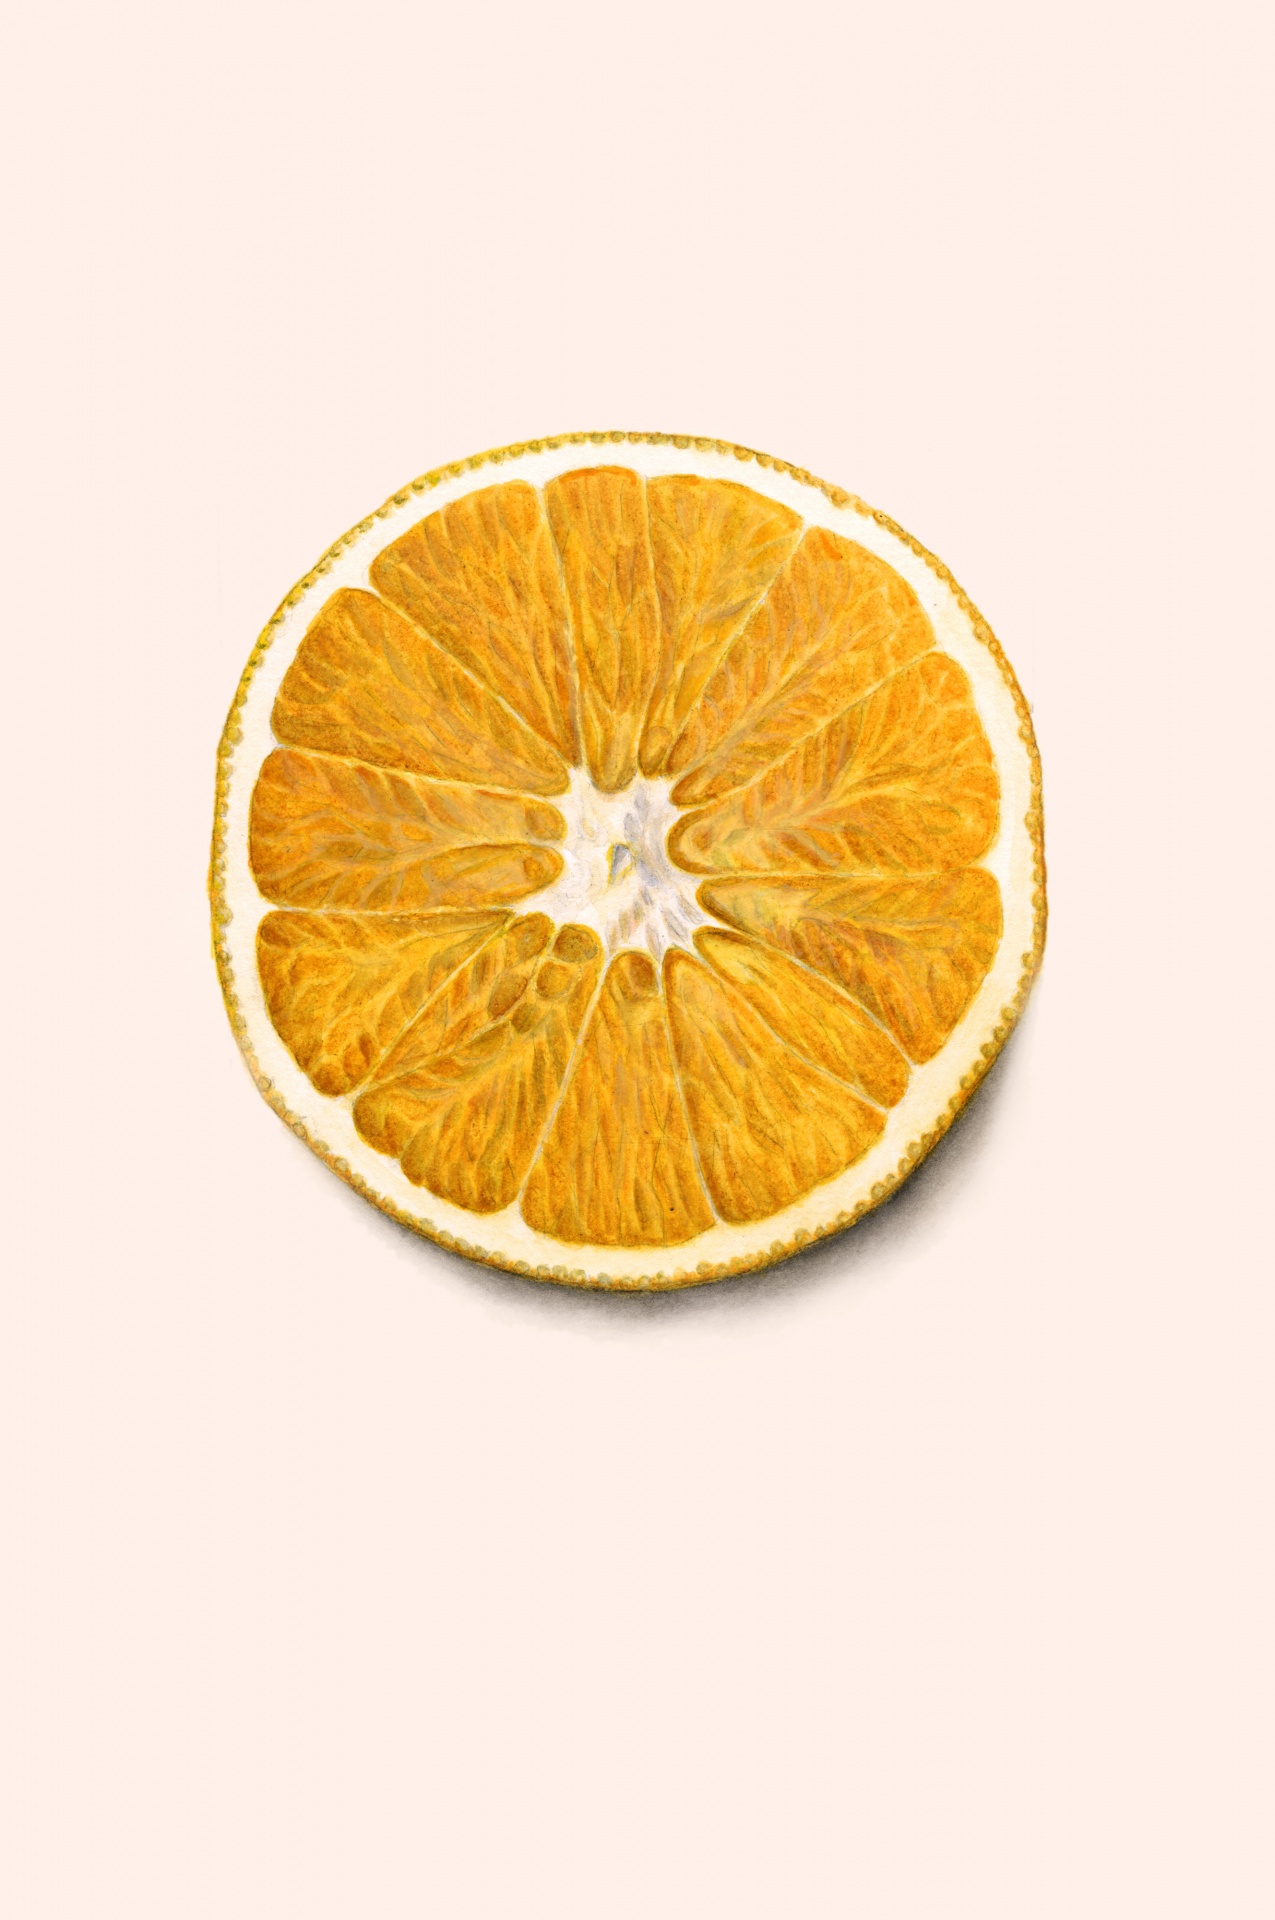 Oranje fruit fruit vintage